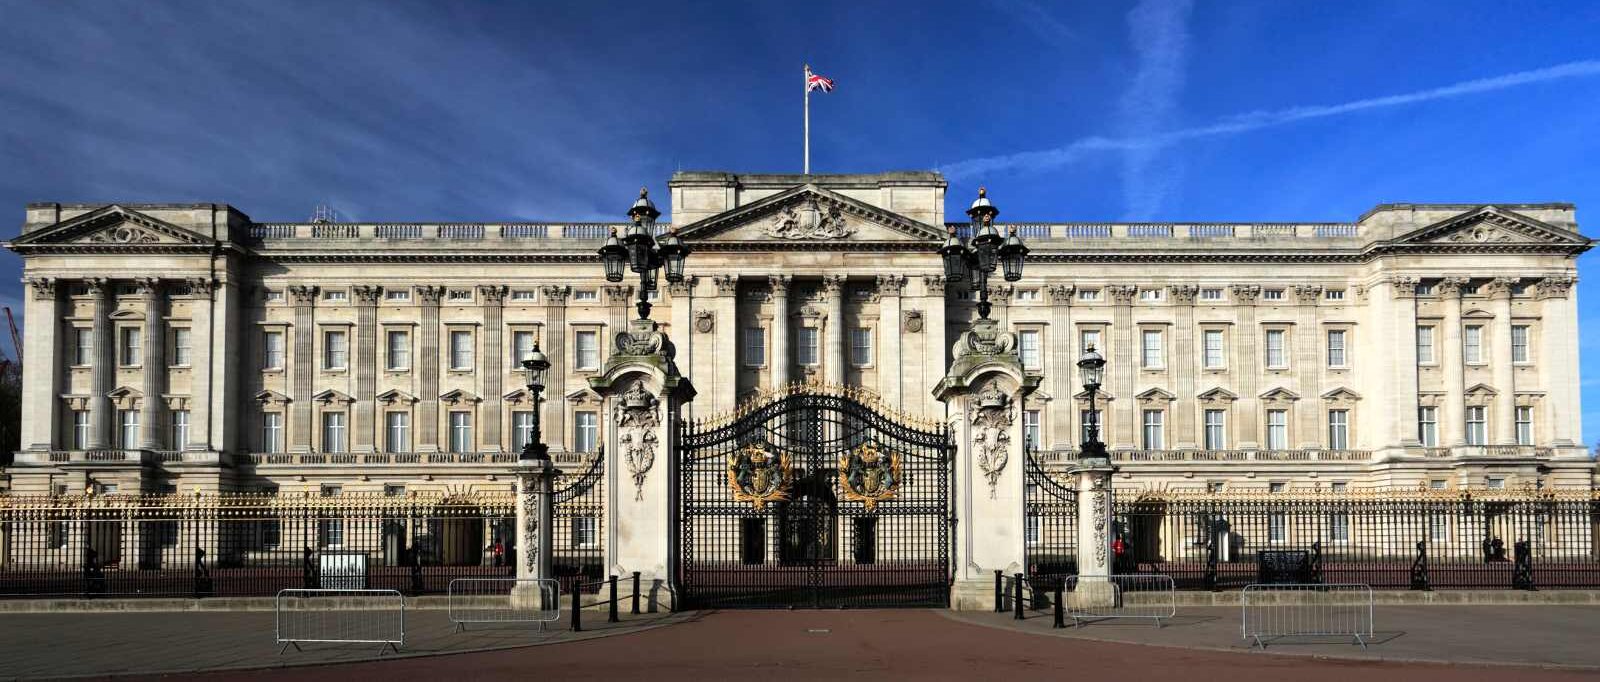 Coronation and Buckingham Palace